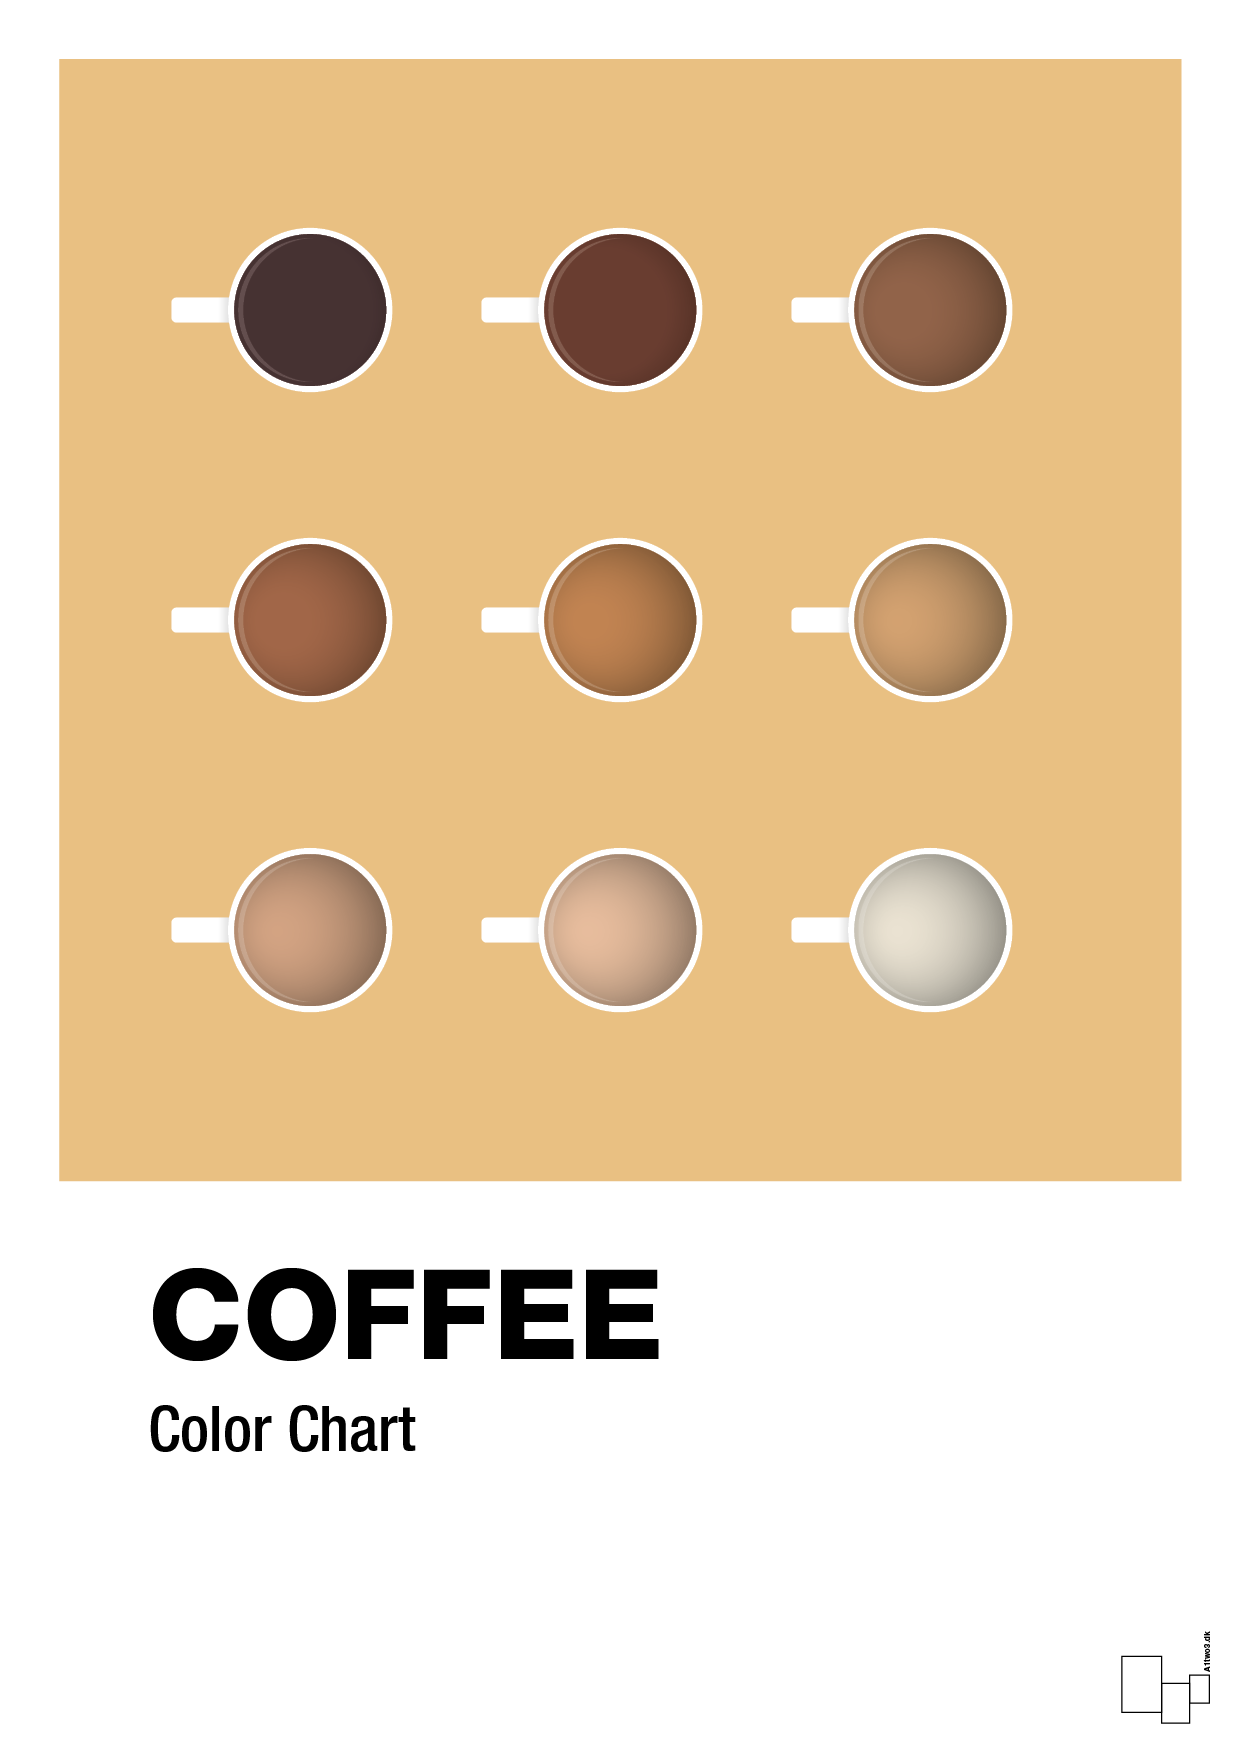 coffee color chart - Plakat med Mad & Drikke i Charismatic